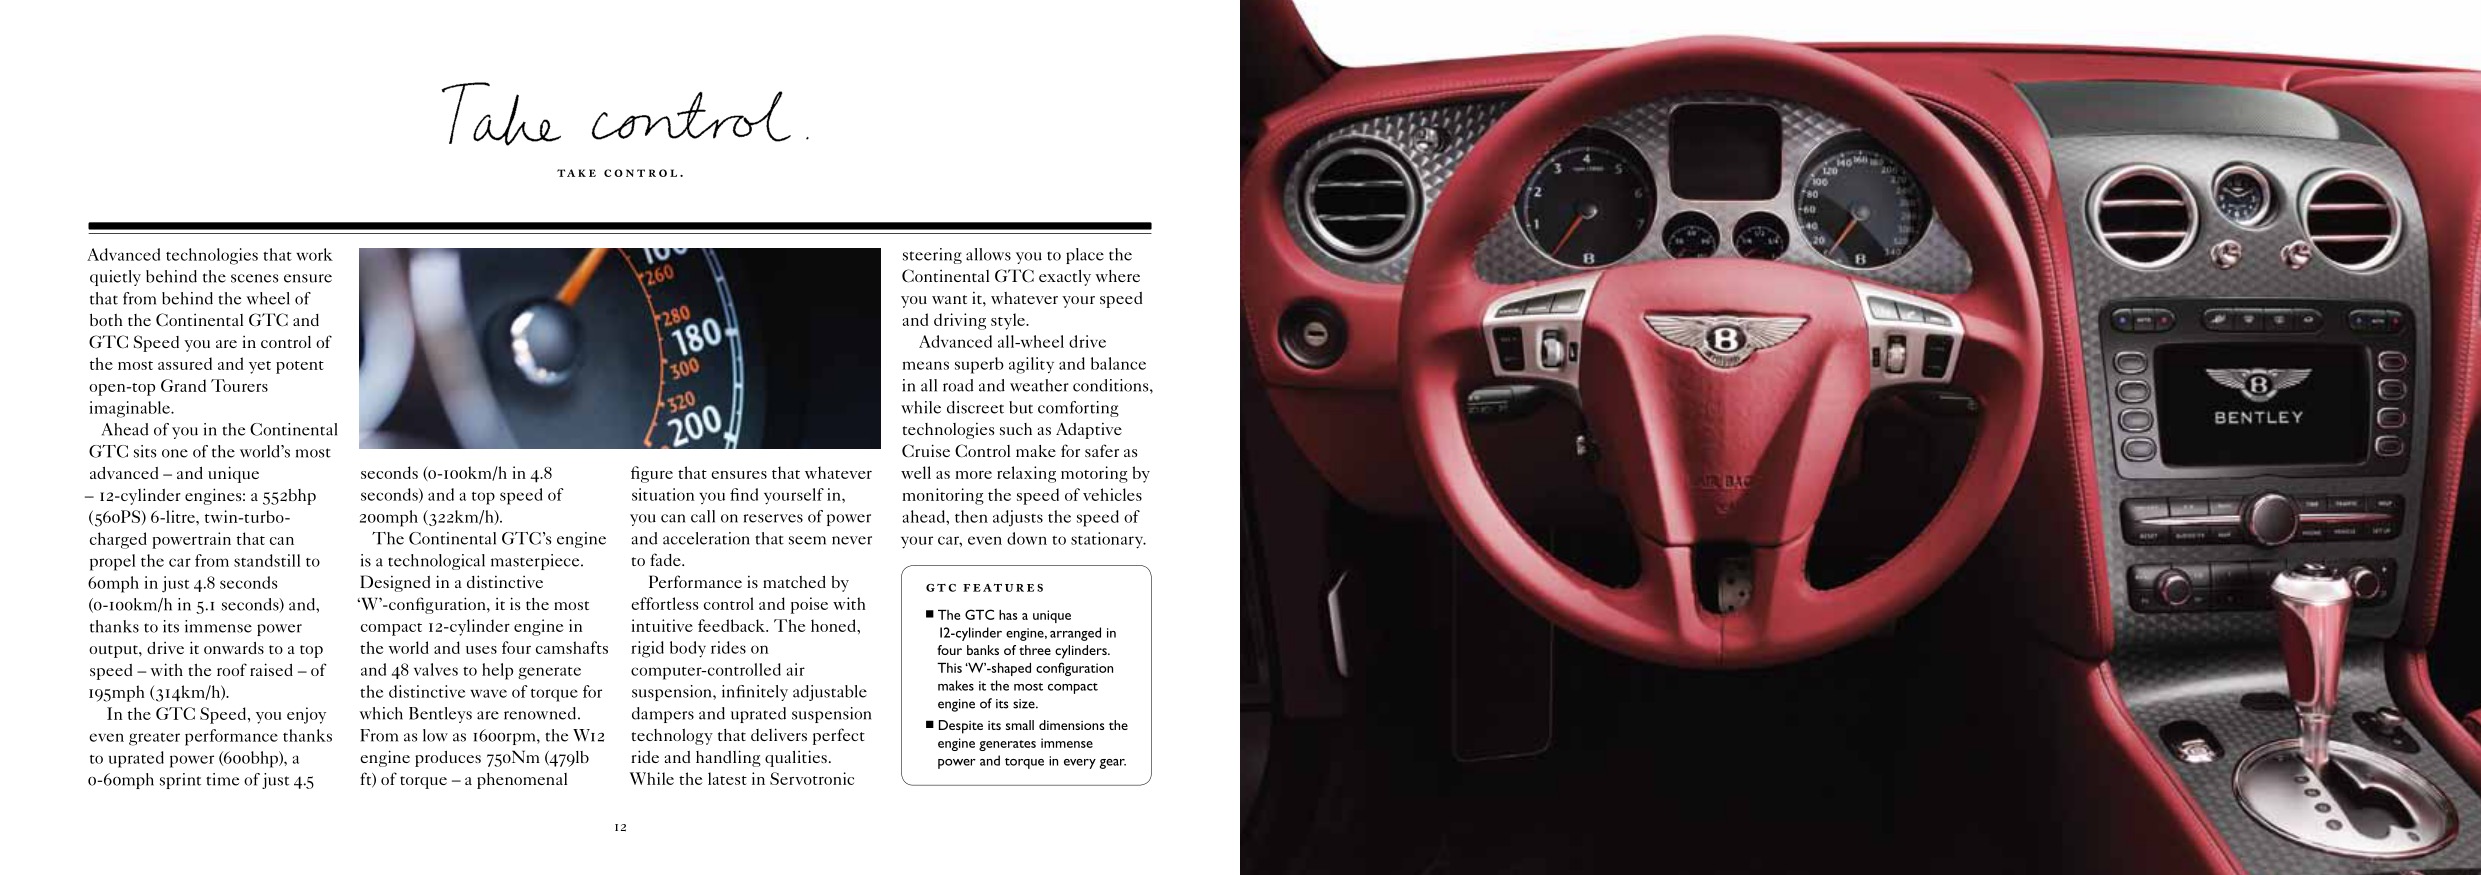 2011 Bentley Continental GTC Brochure Page 23